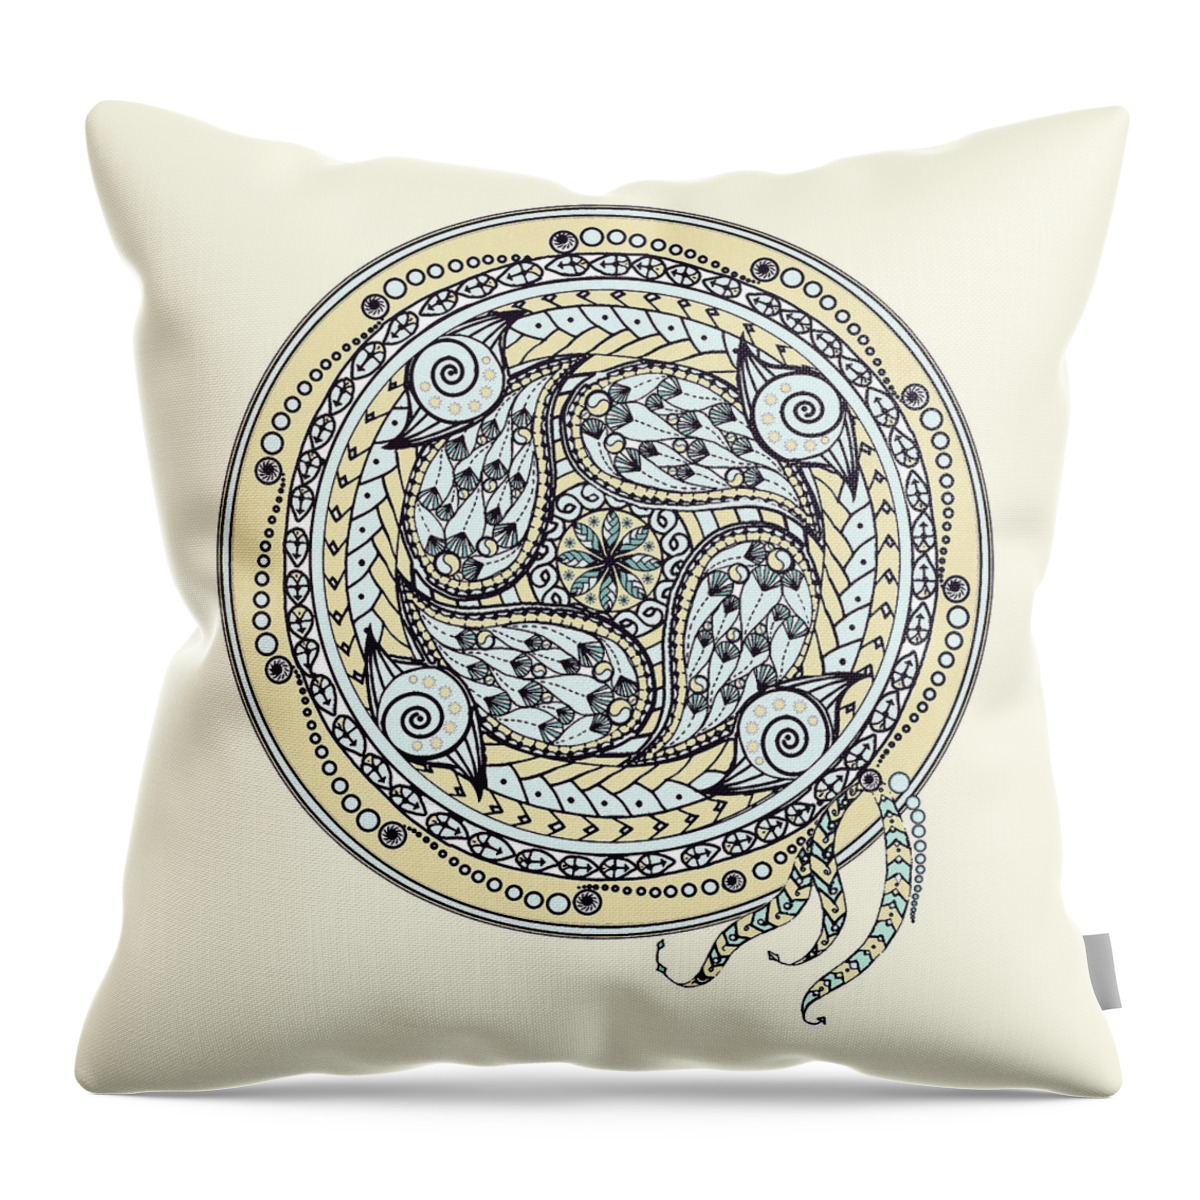 Mandala Throw Pillow featuring the digital art Paisley Balance Mandala by Deborah Smith